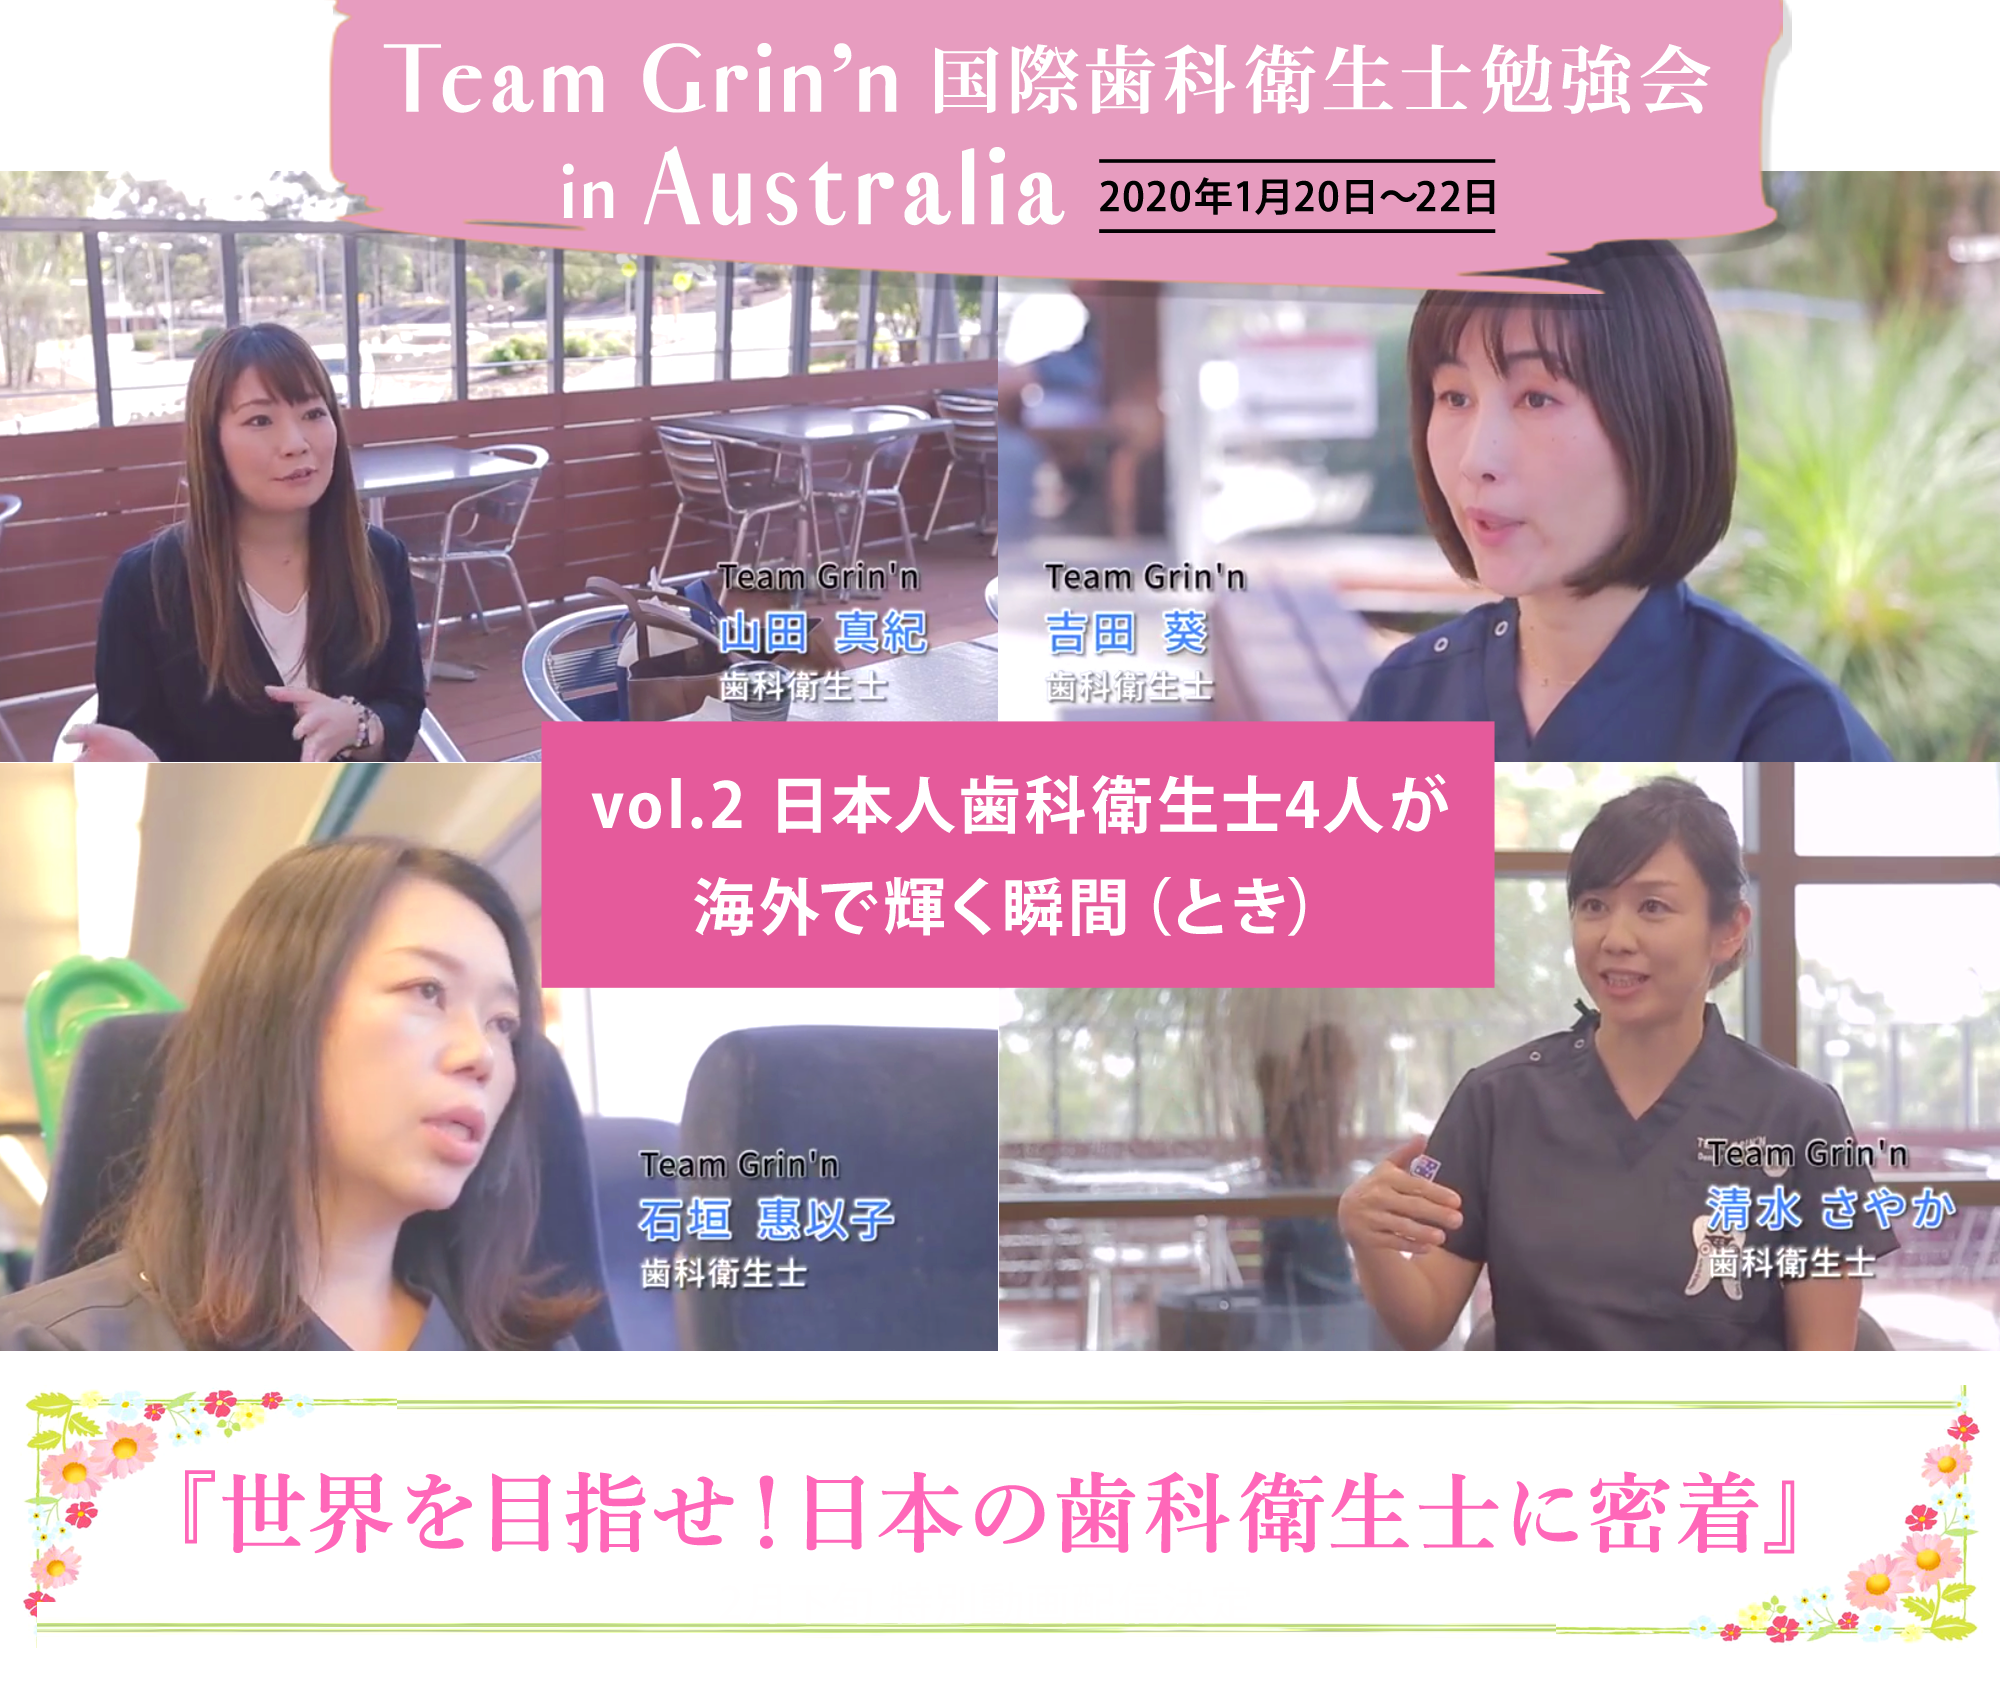 Team Grin N 国際歯科衛生士勉強会 Vol 2 日本人歯科衛生士 4人が海外で輝く瞬間 とき 動画 ウェビナー Dentwave Com デントウェーブドットコム